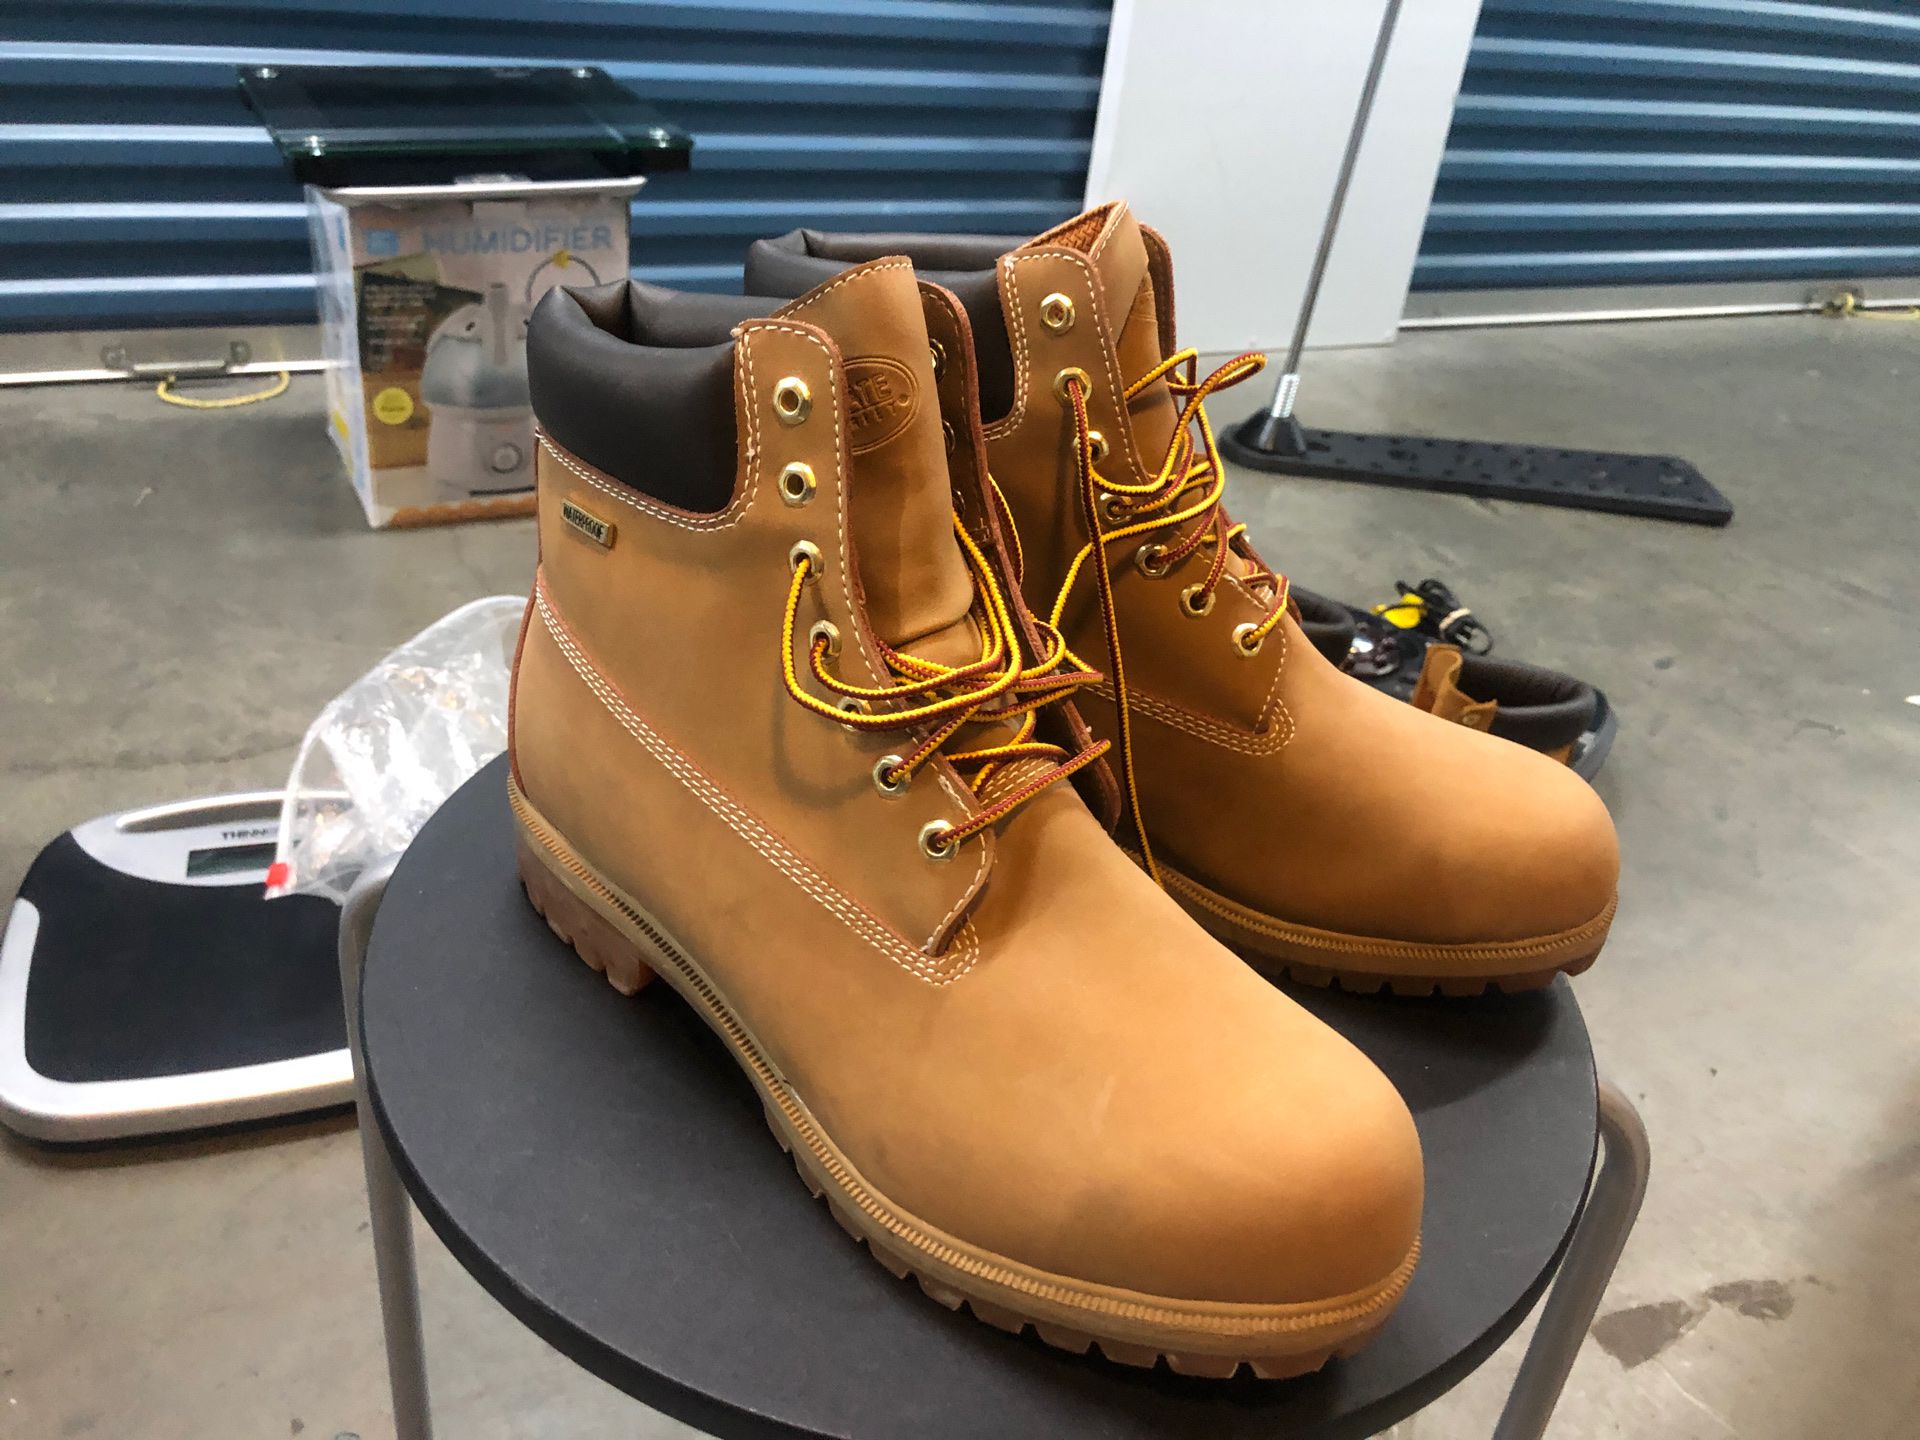 New men’s work boots State Street size 13 waterproof